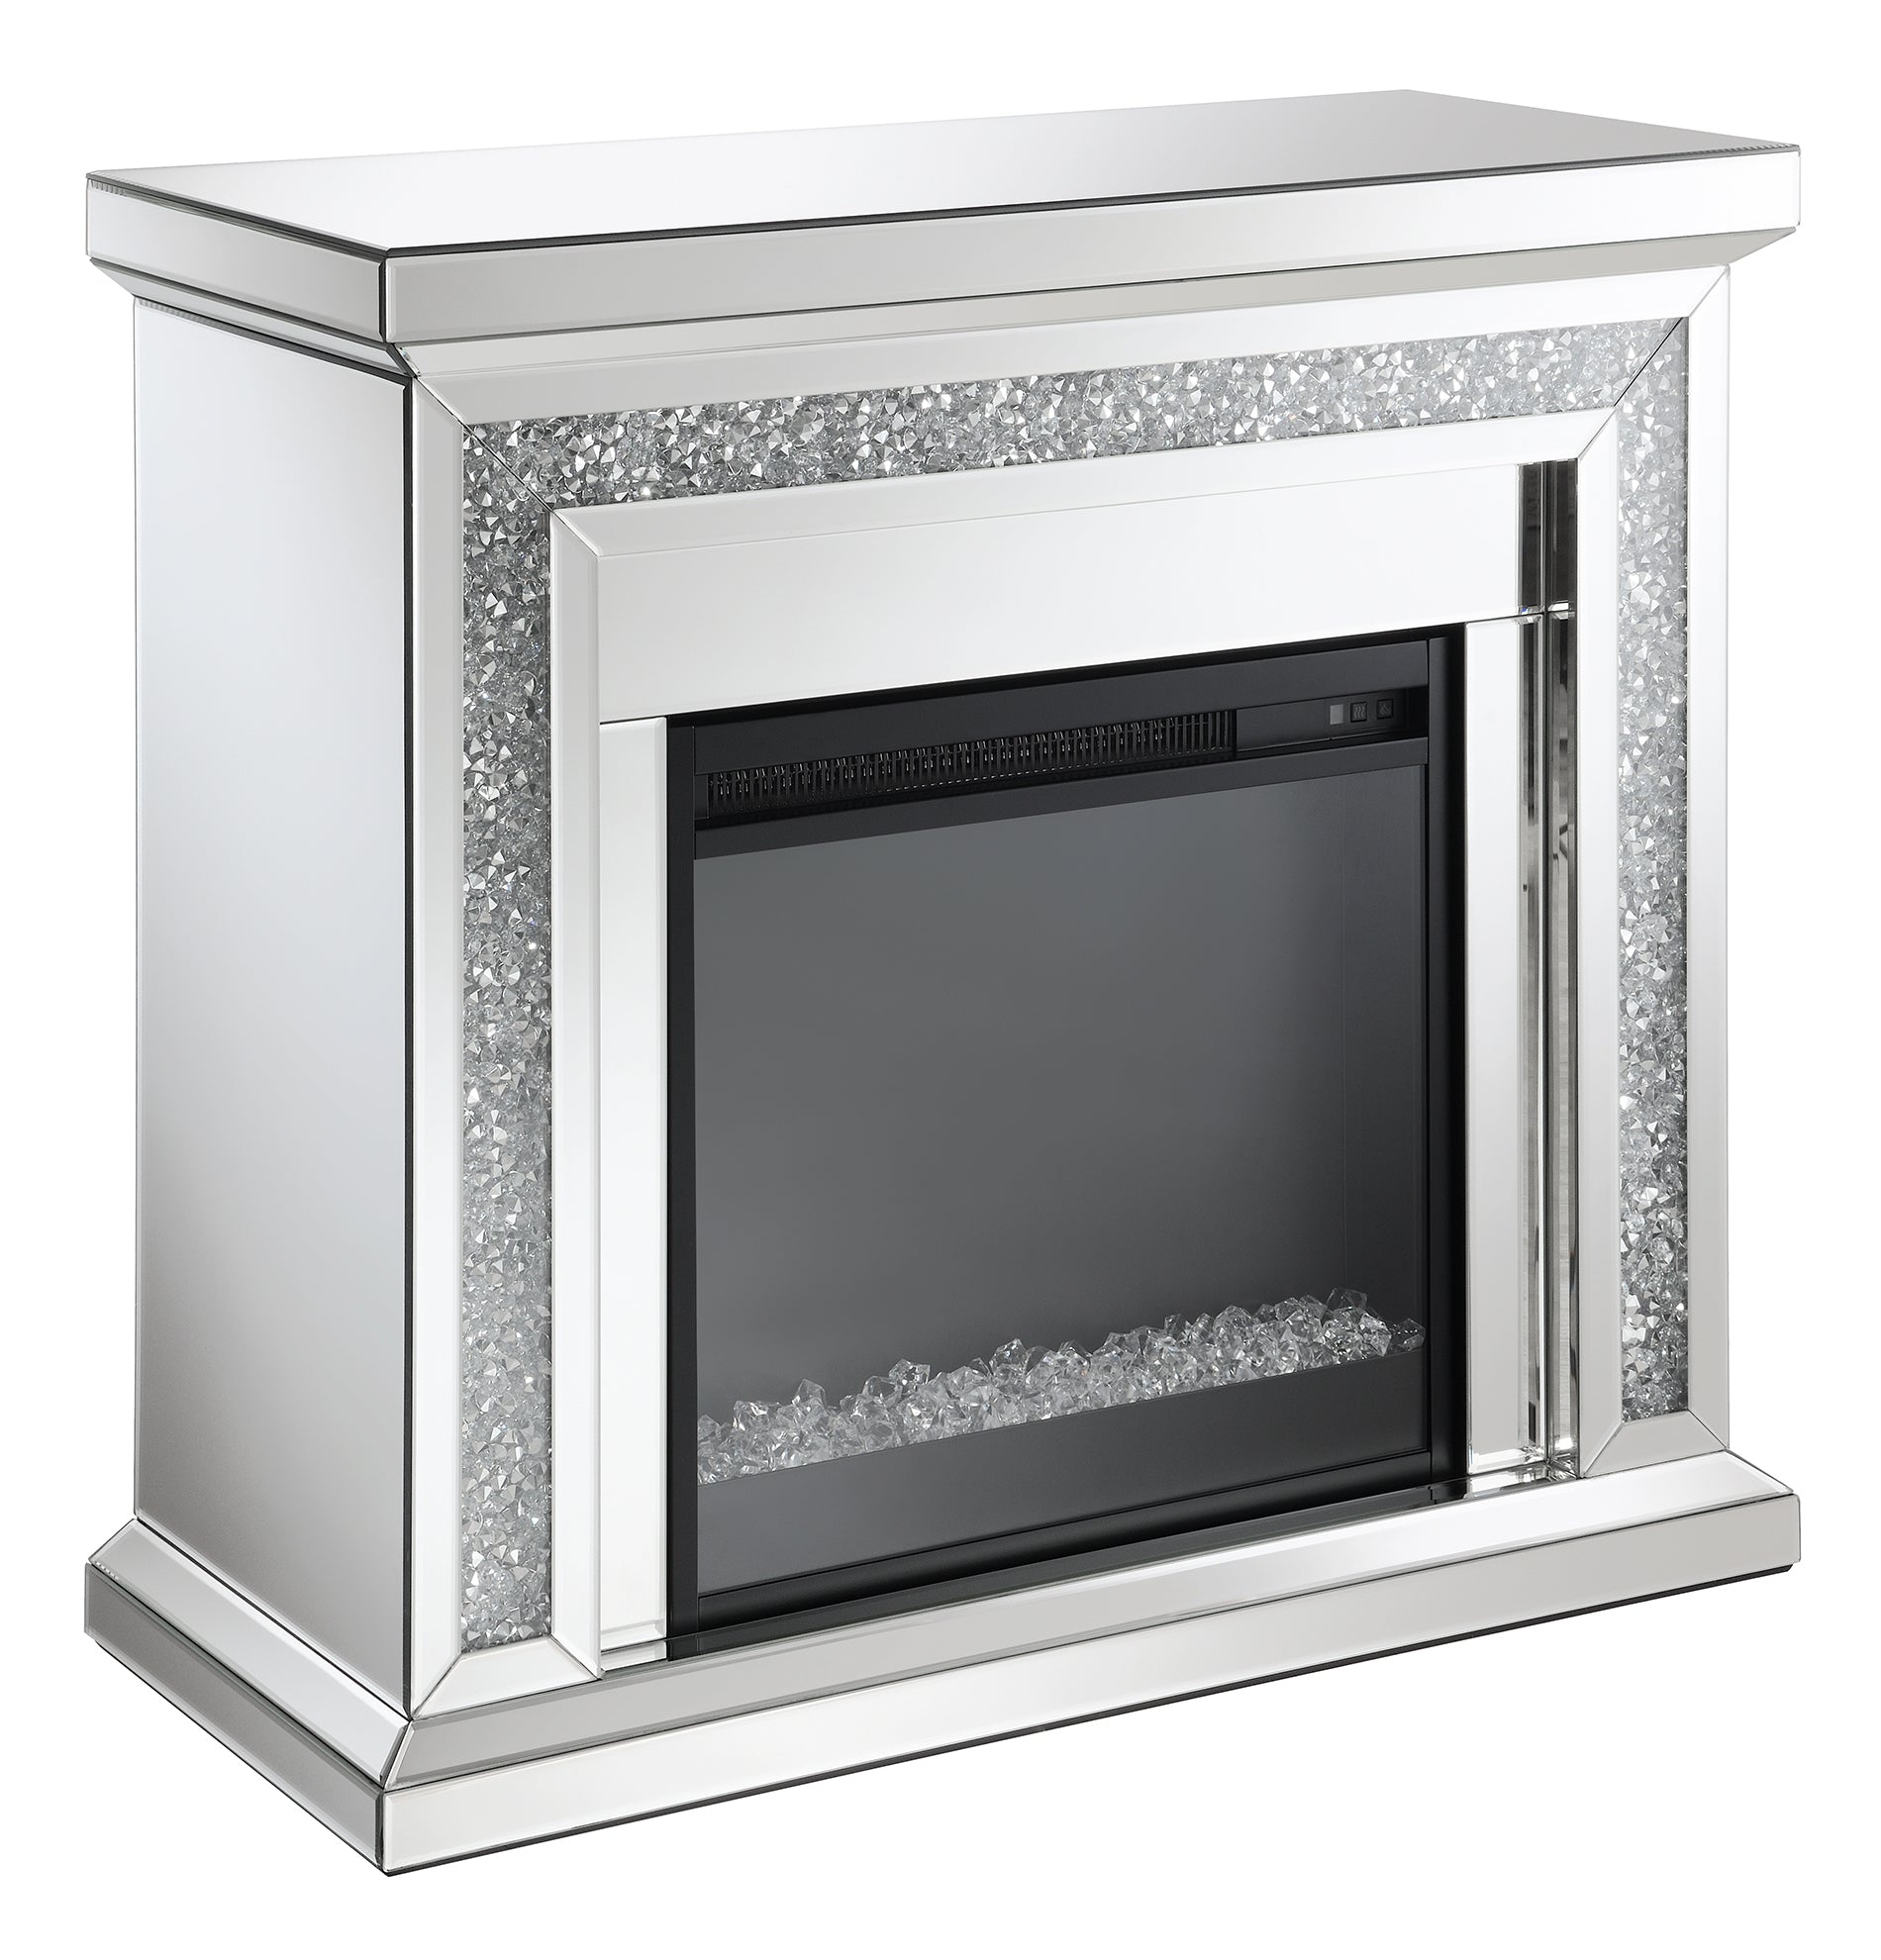 Lorelai Freestanding Mirrored Fireplace